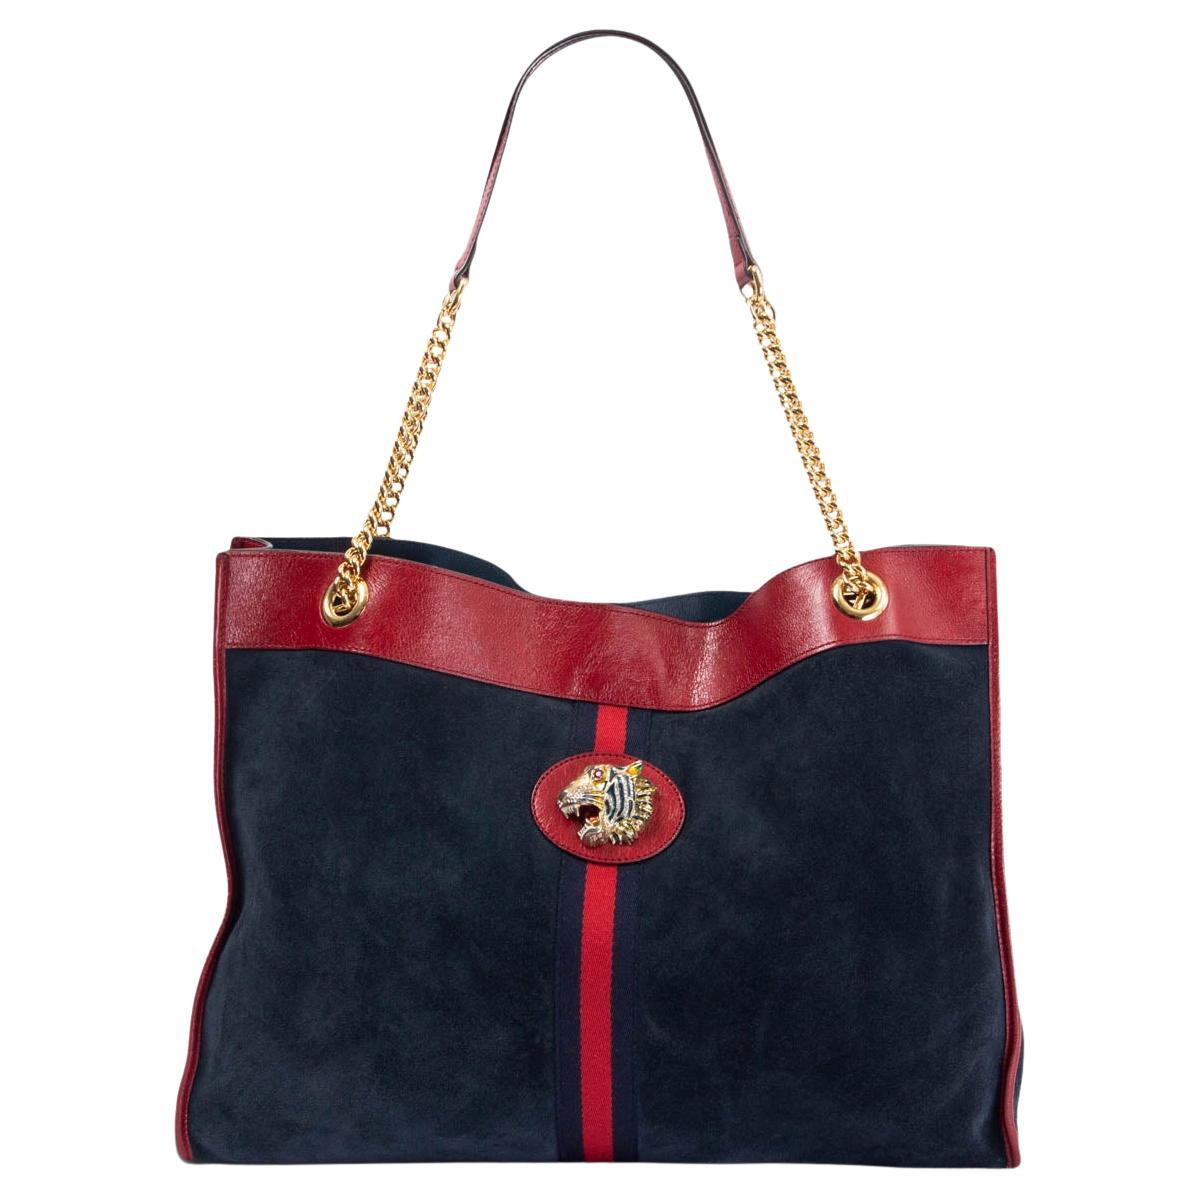 GUCCI navy blue suede & red leather RAJA LARGE TOTE Shoulder Bag